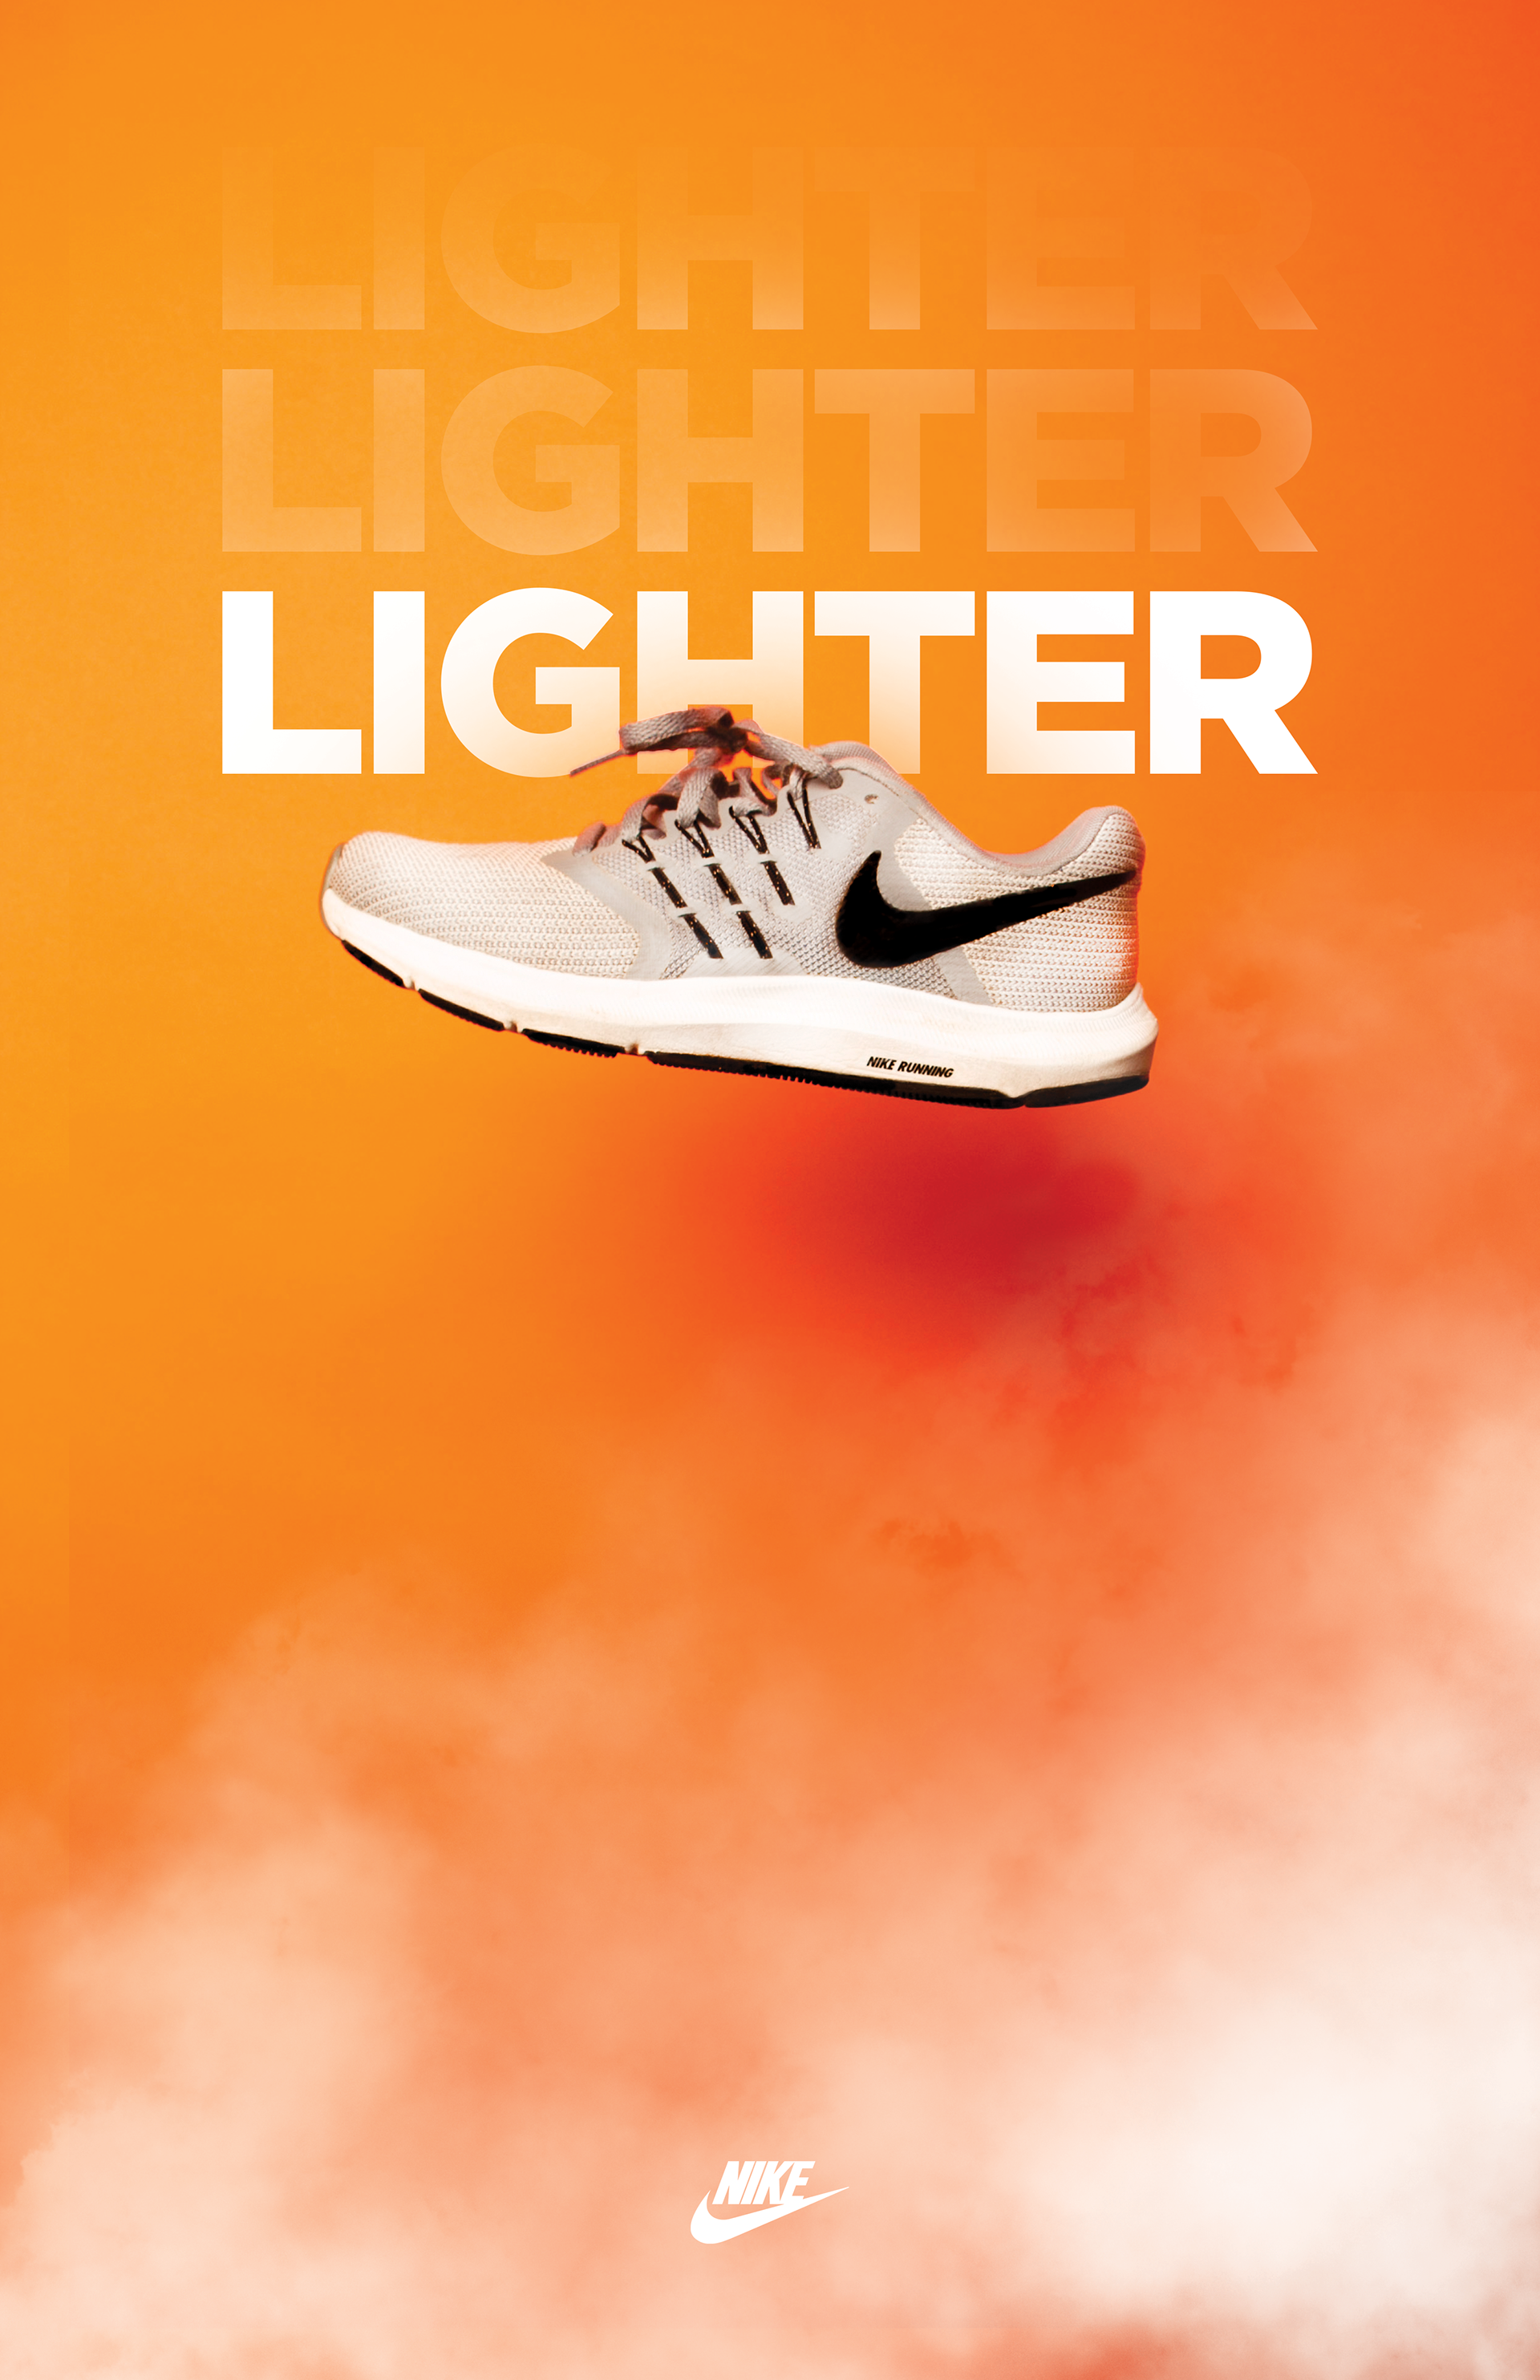 Rasar Nike Ad Campaign